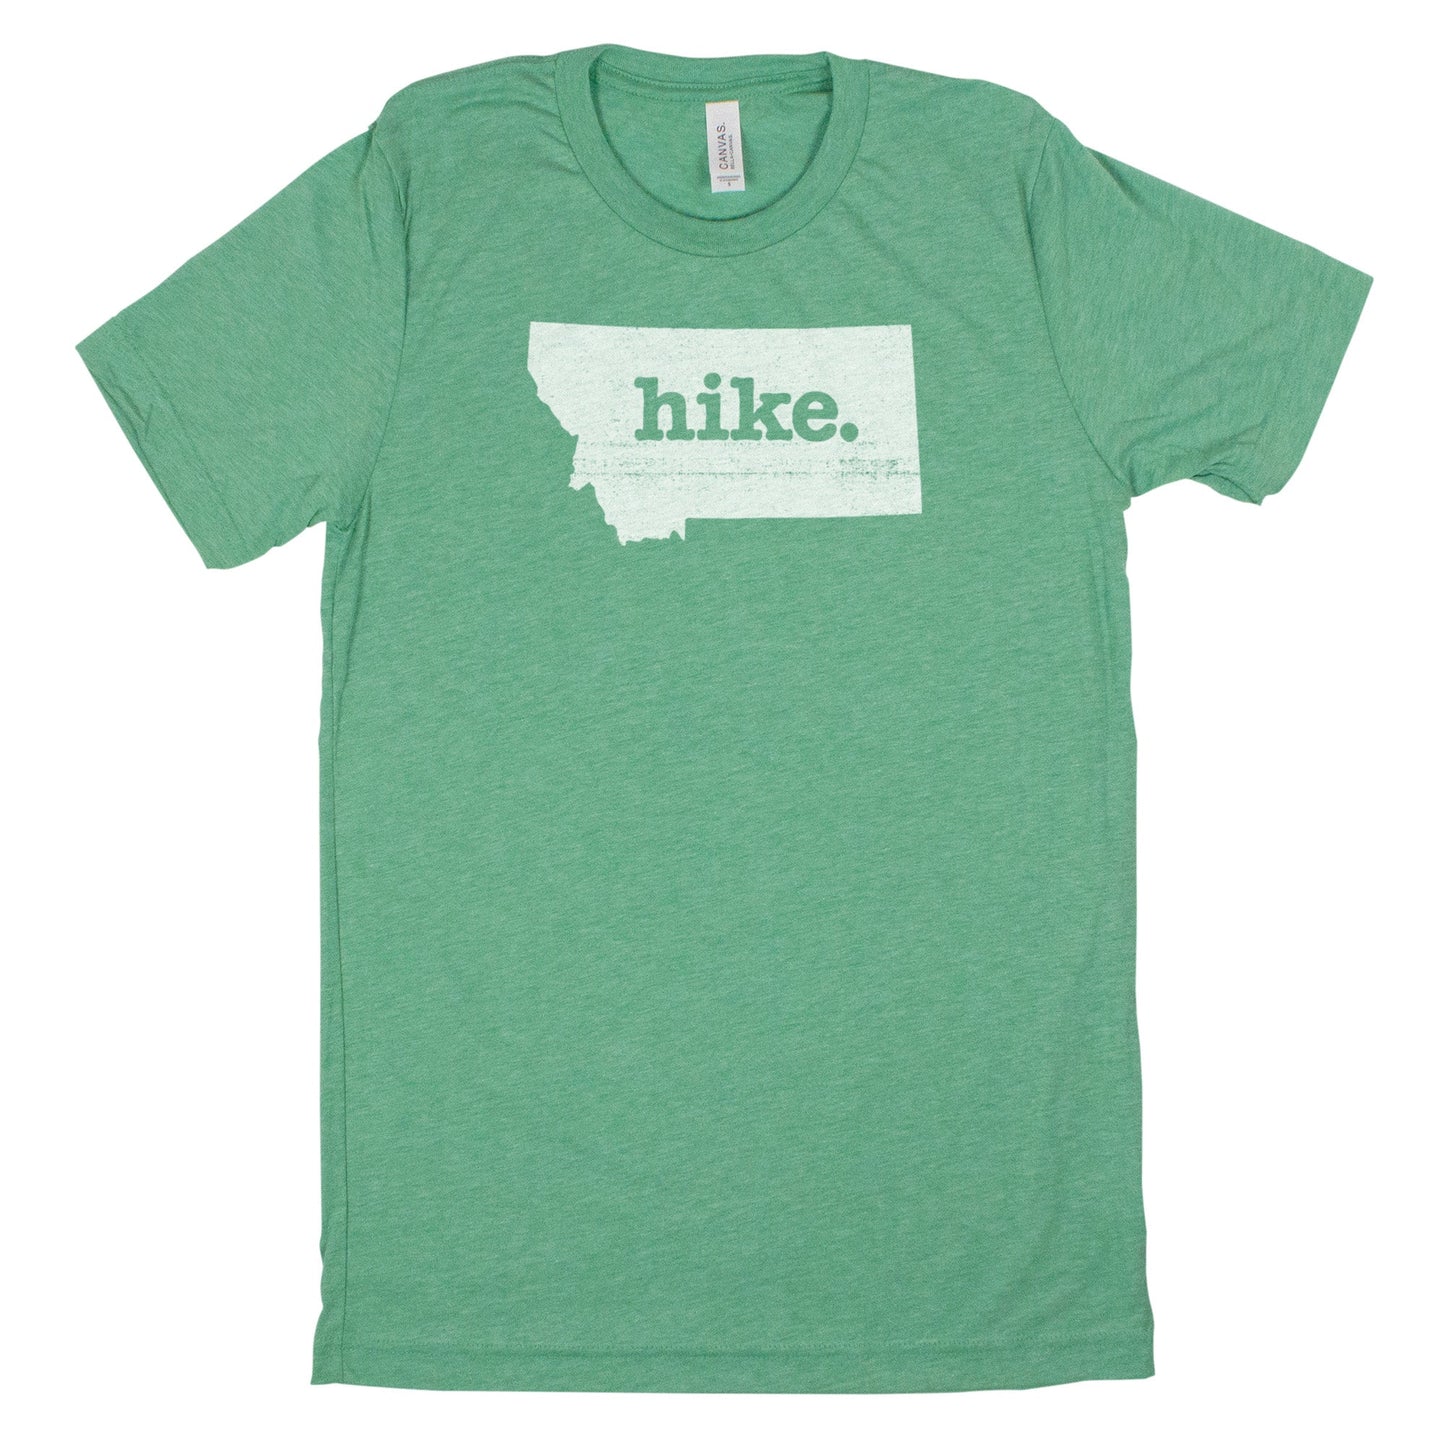 hike. Men's Unisex T-Shirt - Montana